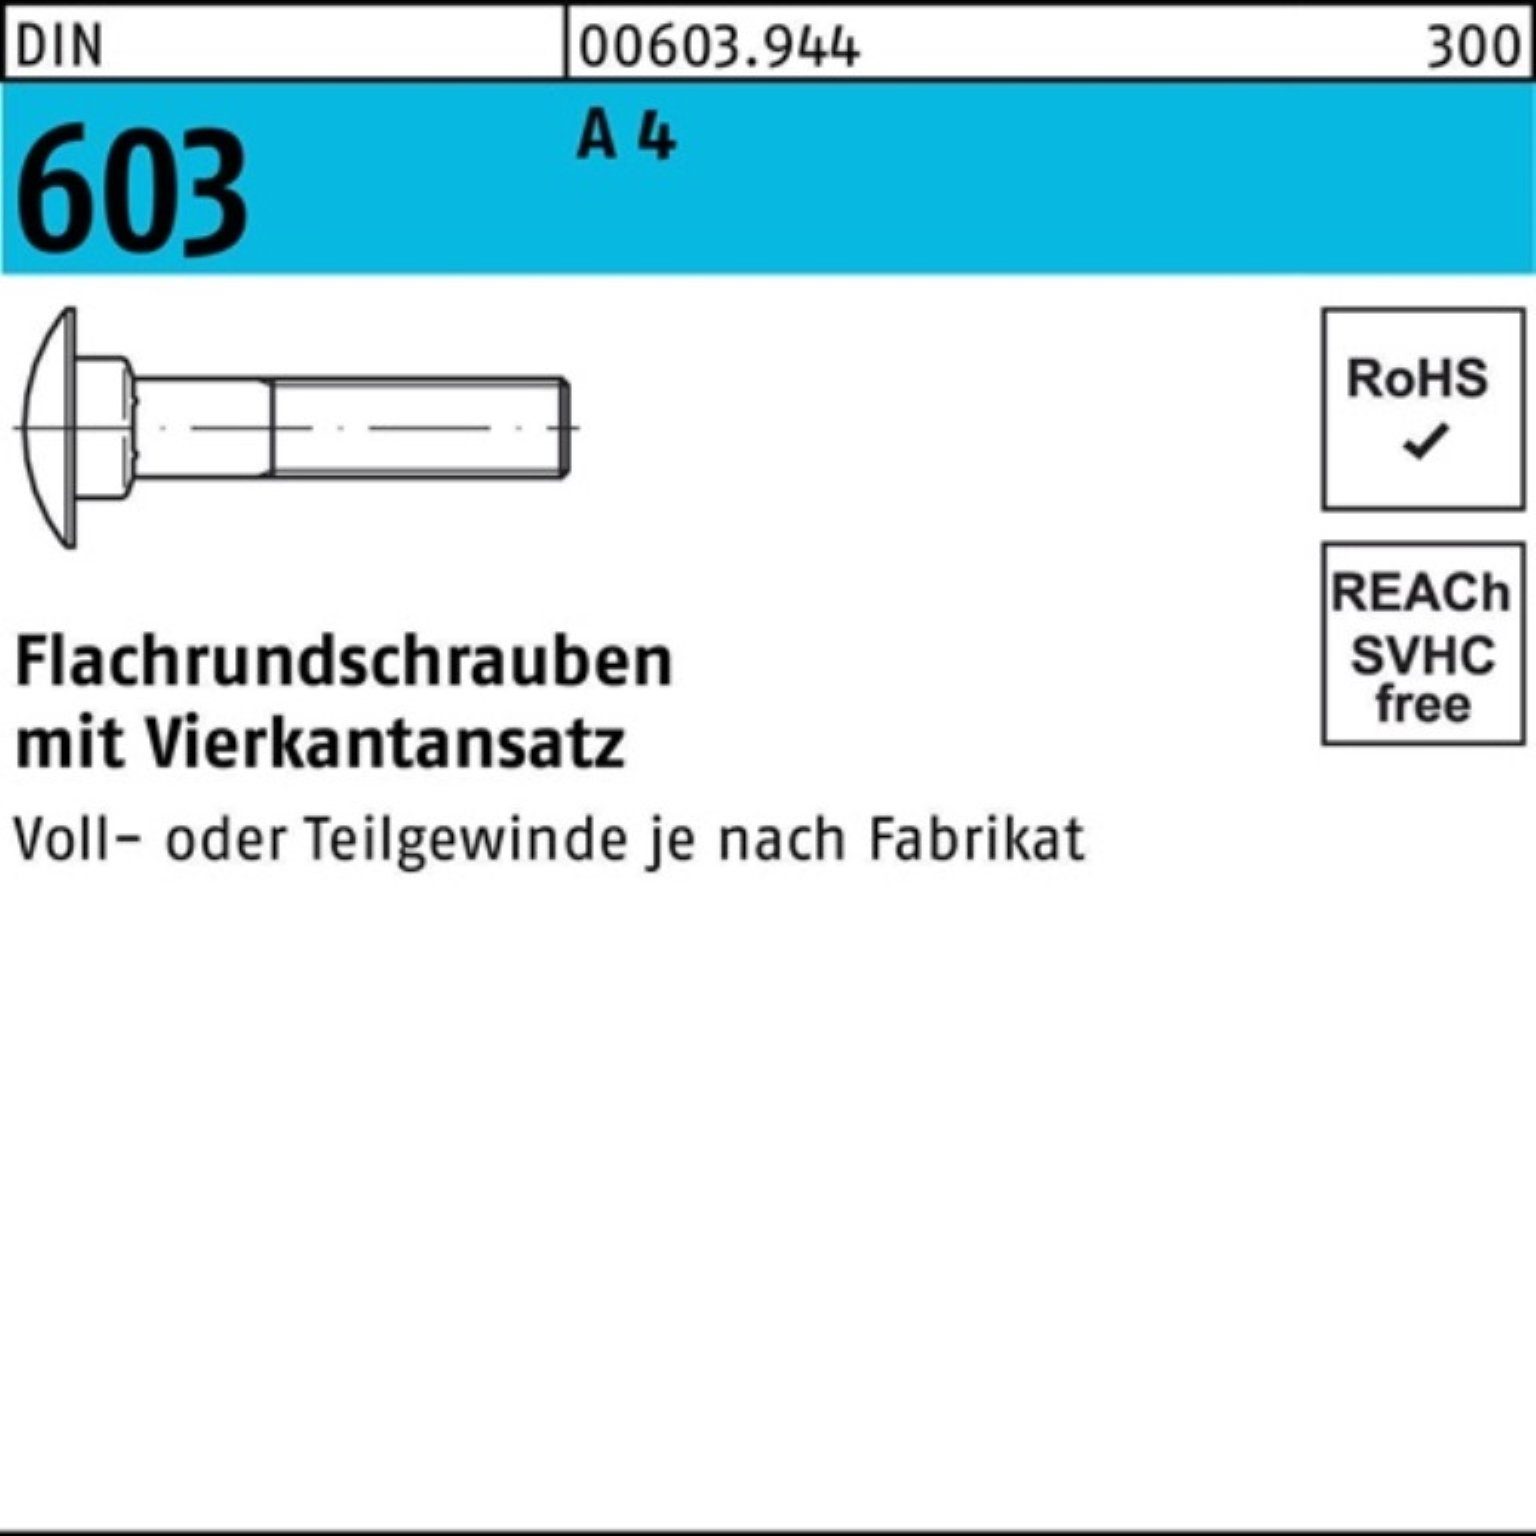 Reyher Schraube 100er Pack Flachrundschraube DIN 603 Vierkantansatz M10x 130 A 4 1 St